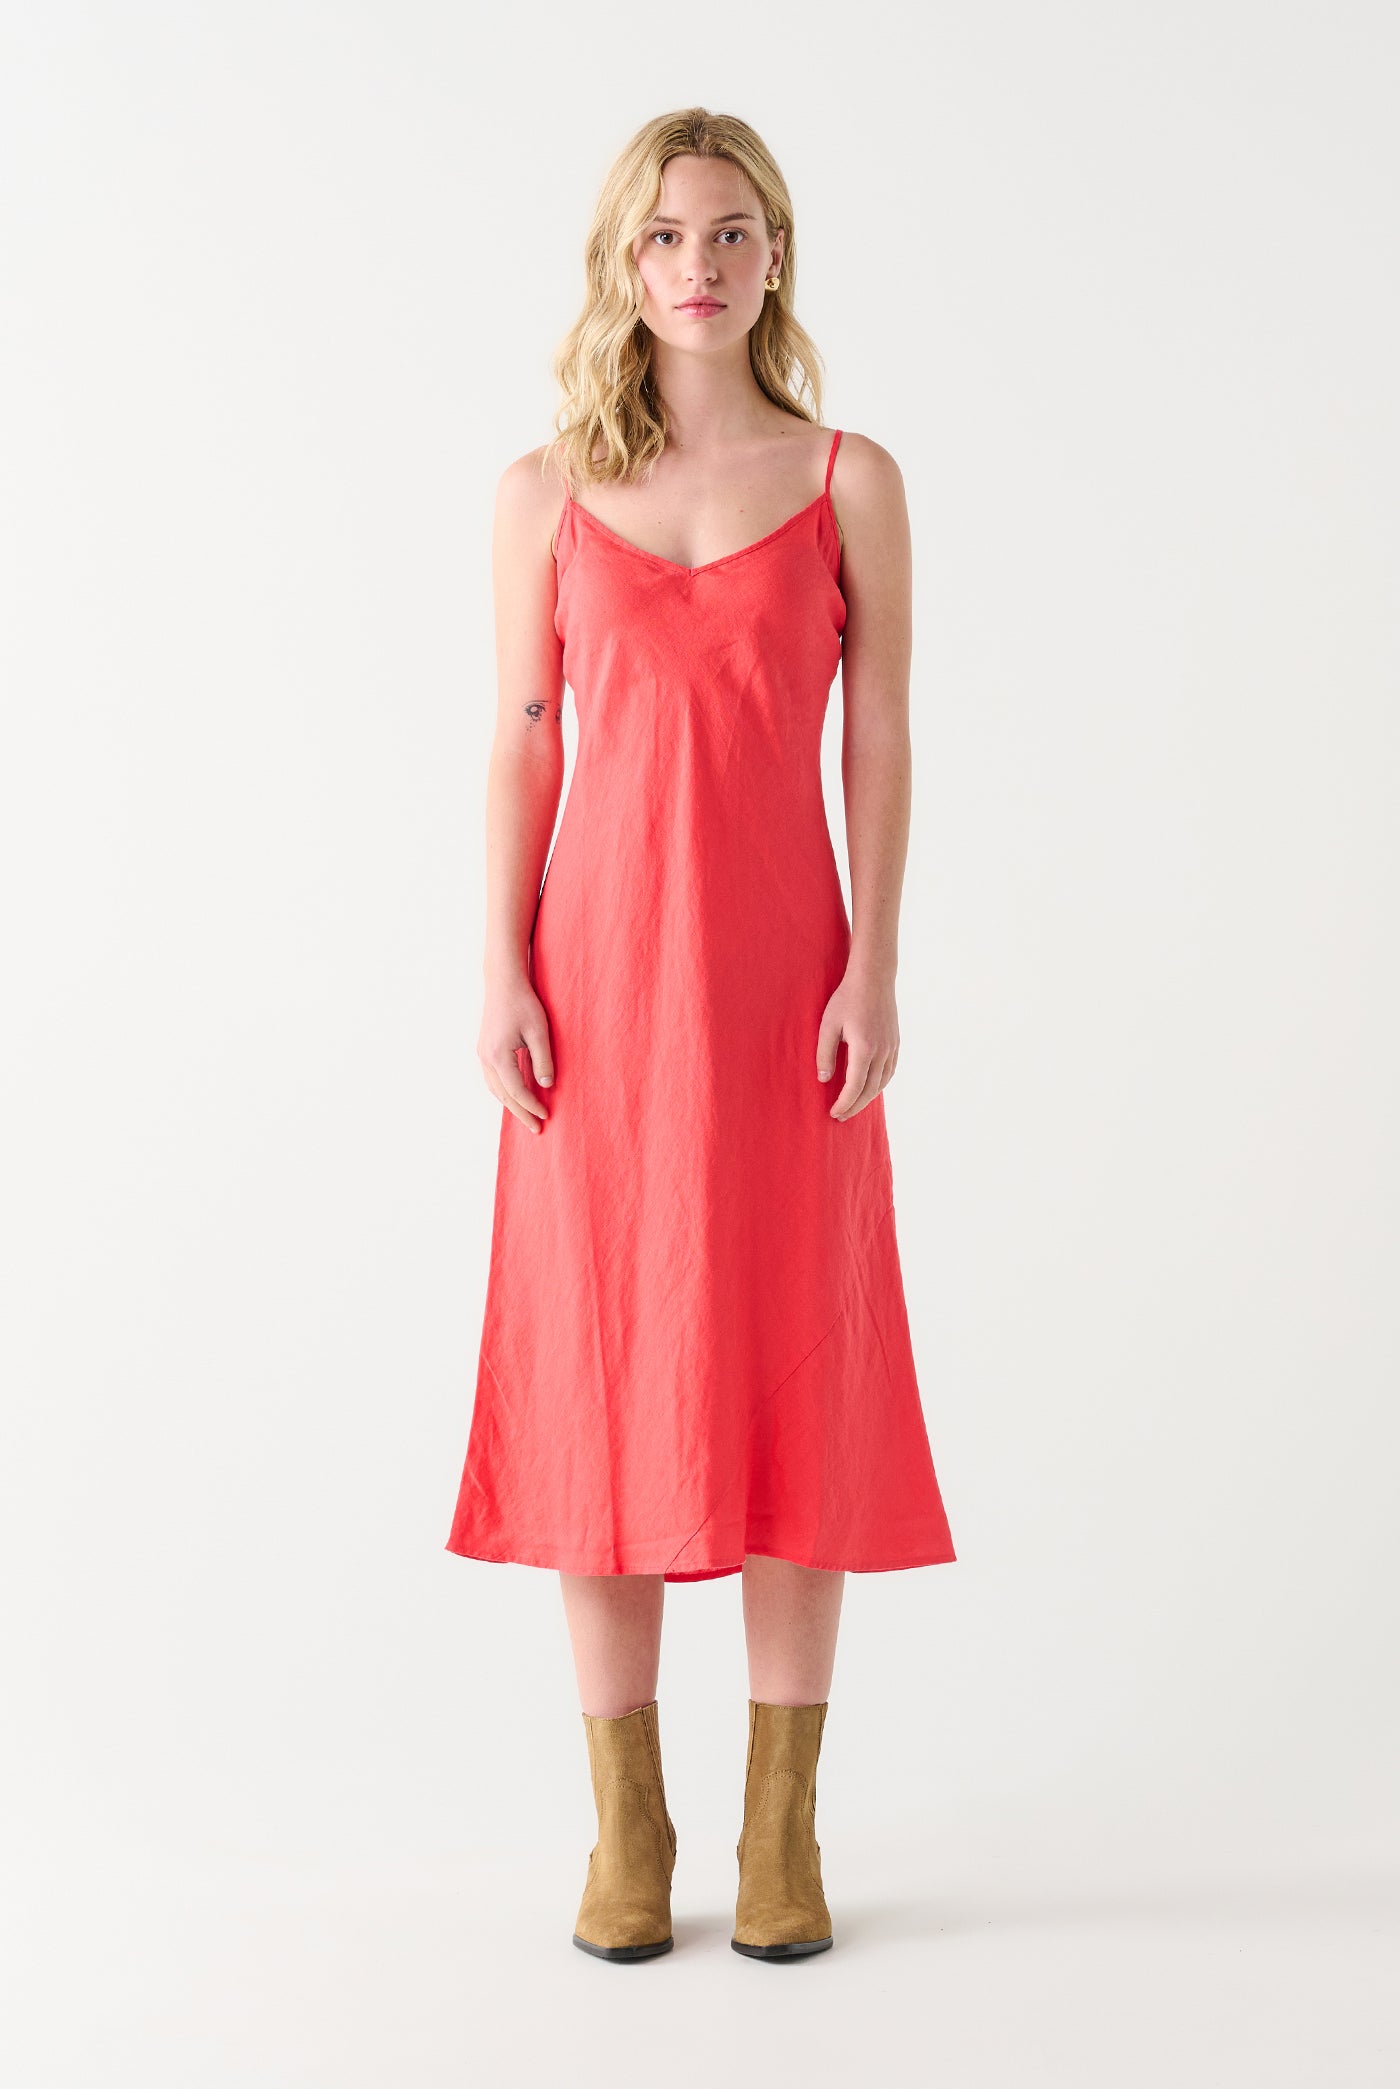 Cherry Boom Linen Midi Slip Dress-Dresses-Vixen Collection, Day Spa and Women's Boutique Located in Seattle, Washington